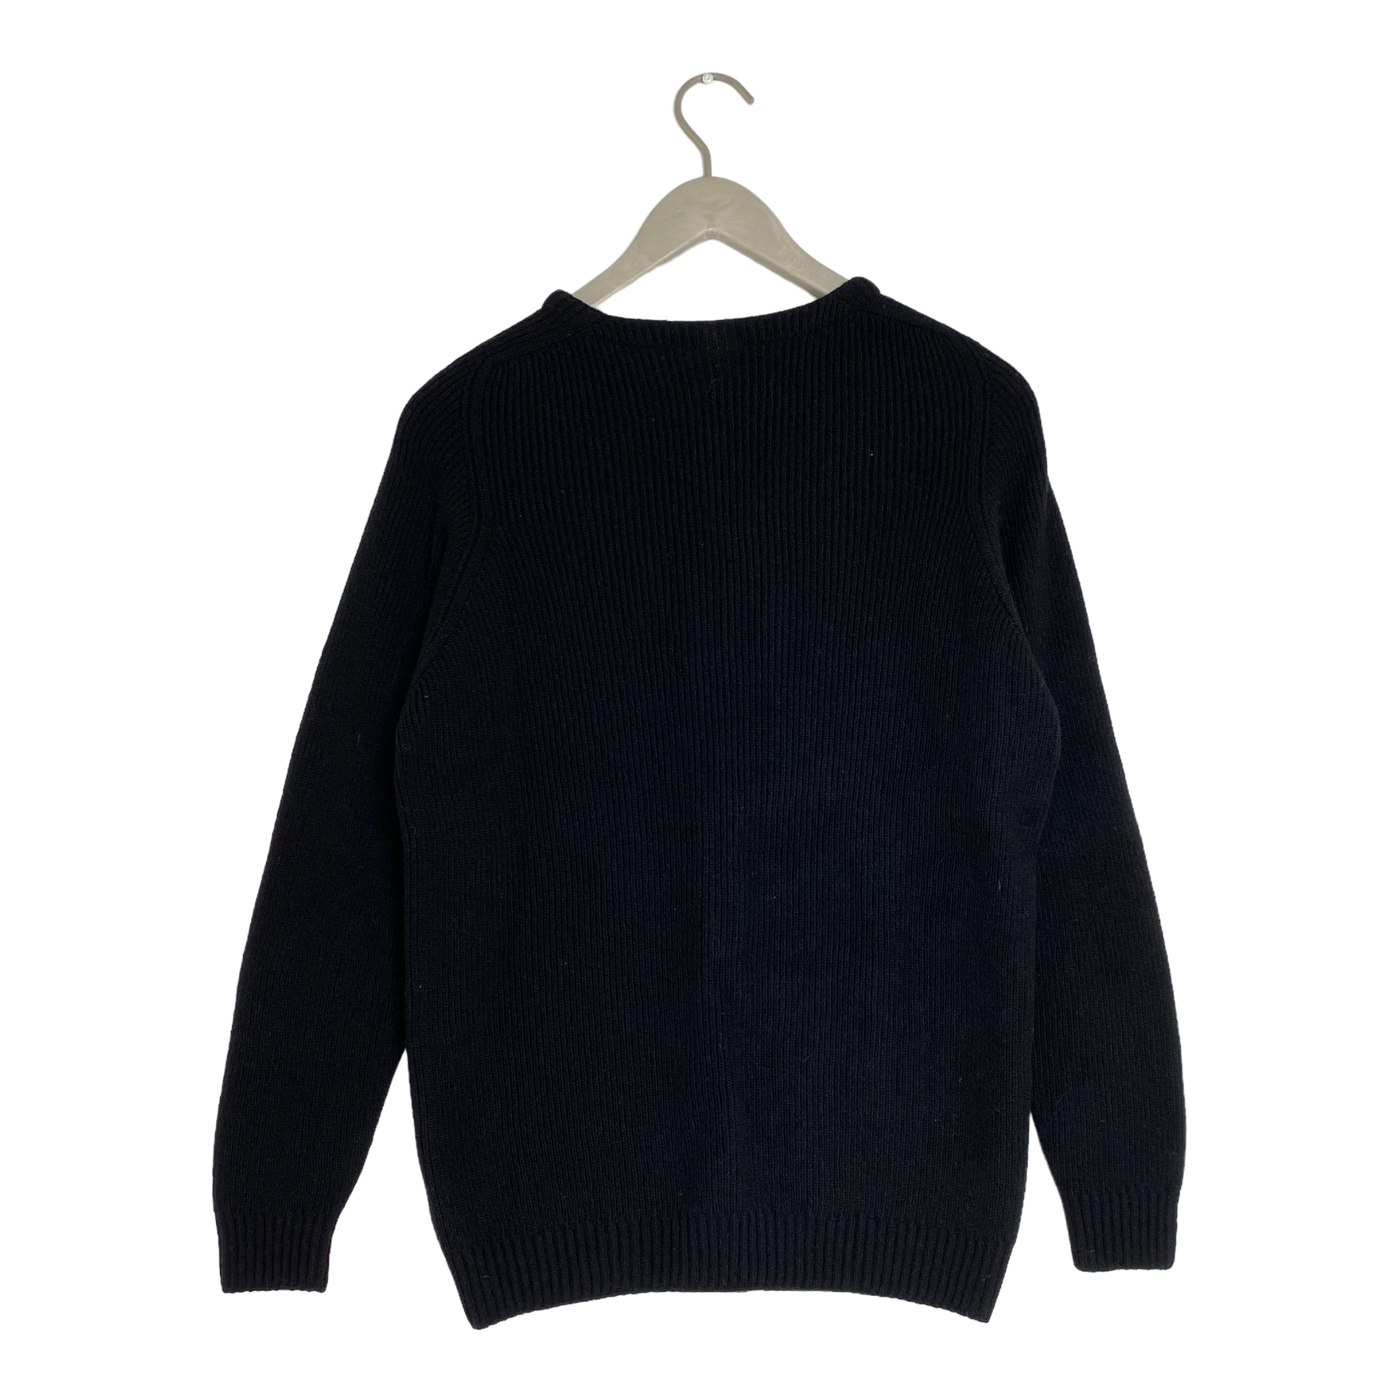 North Outdoor merino sweater, black | woman M